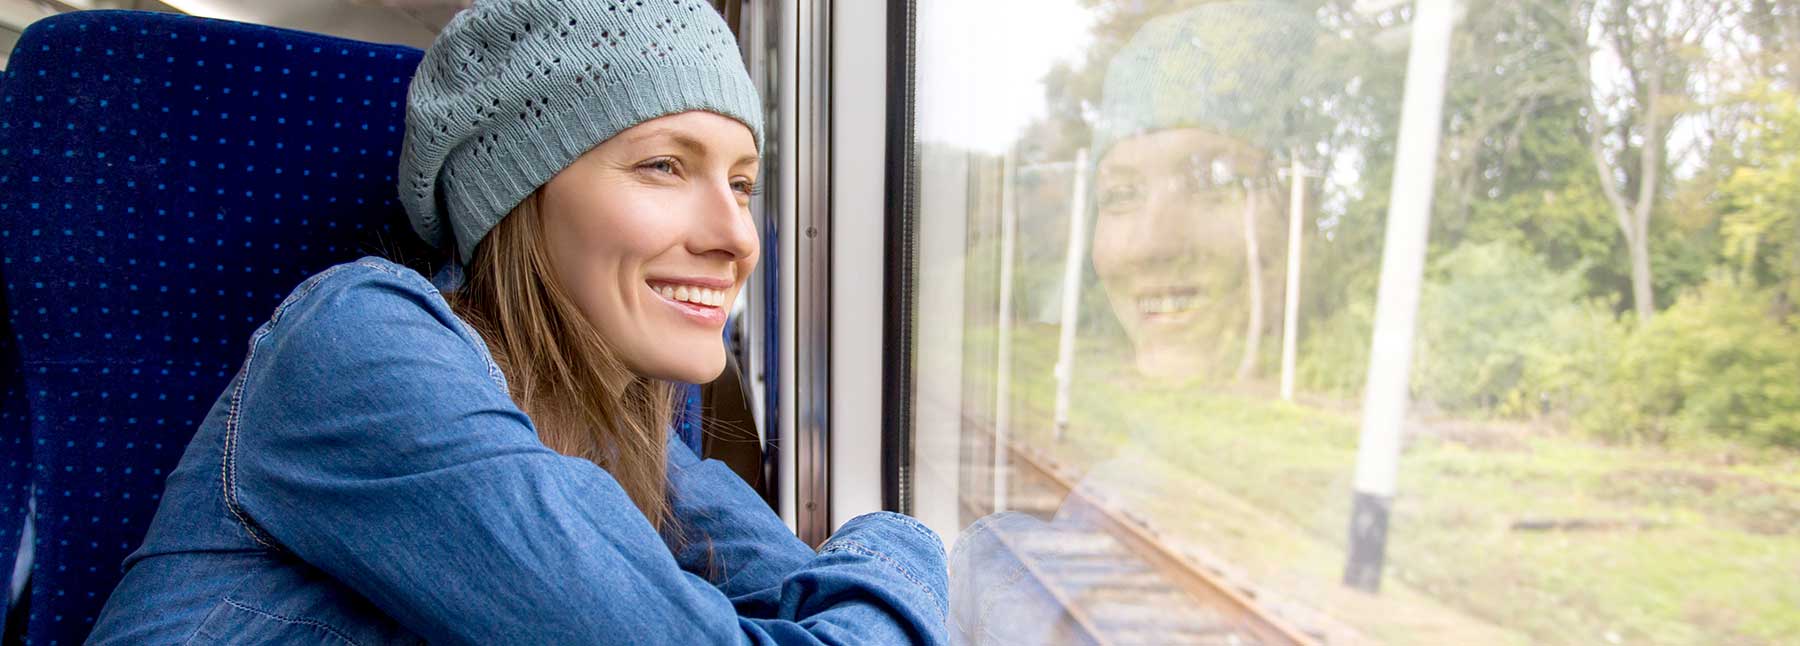 woman on train